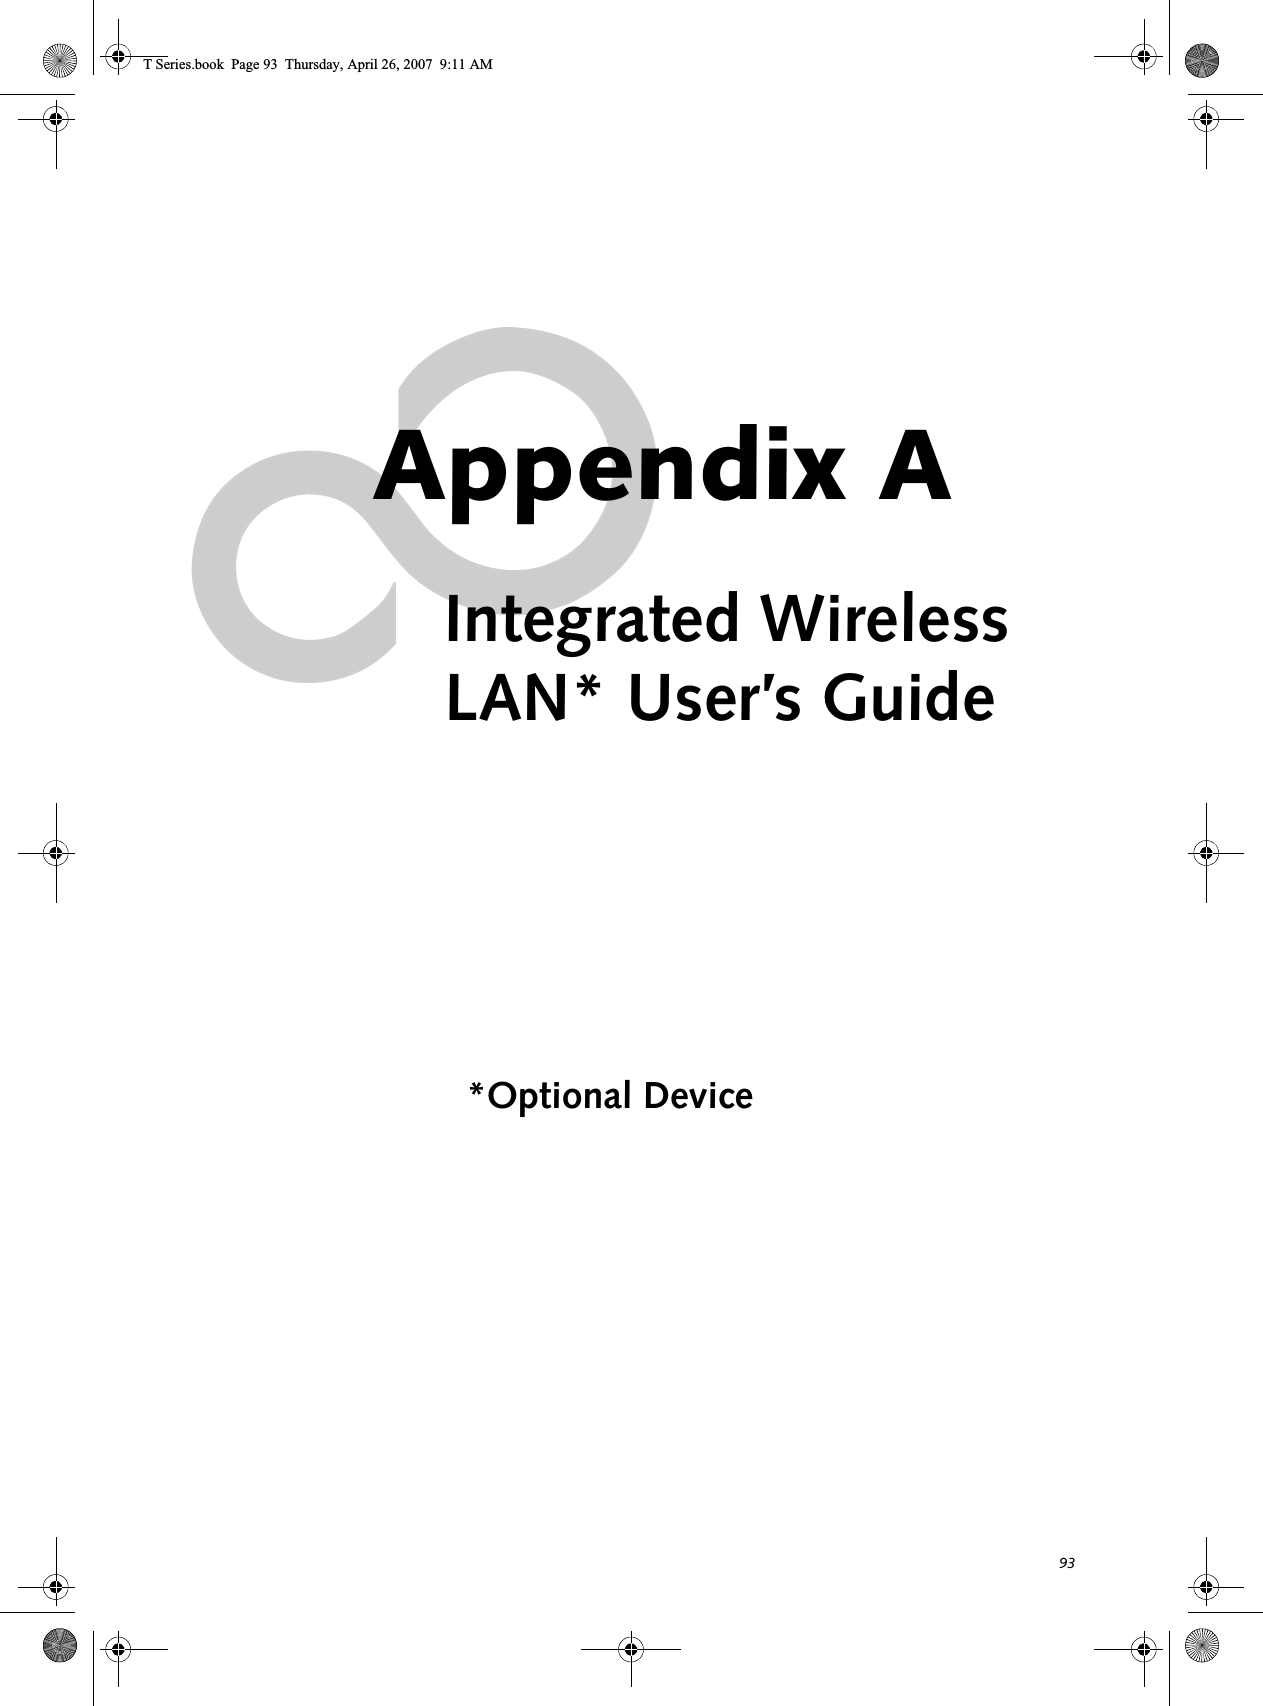 93Appendix AIntegrated WirelessLAN* User’s Guide*Optional DeviceT Series.book  Page 93  Thursday, April 26, 2007  9:11 AM